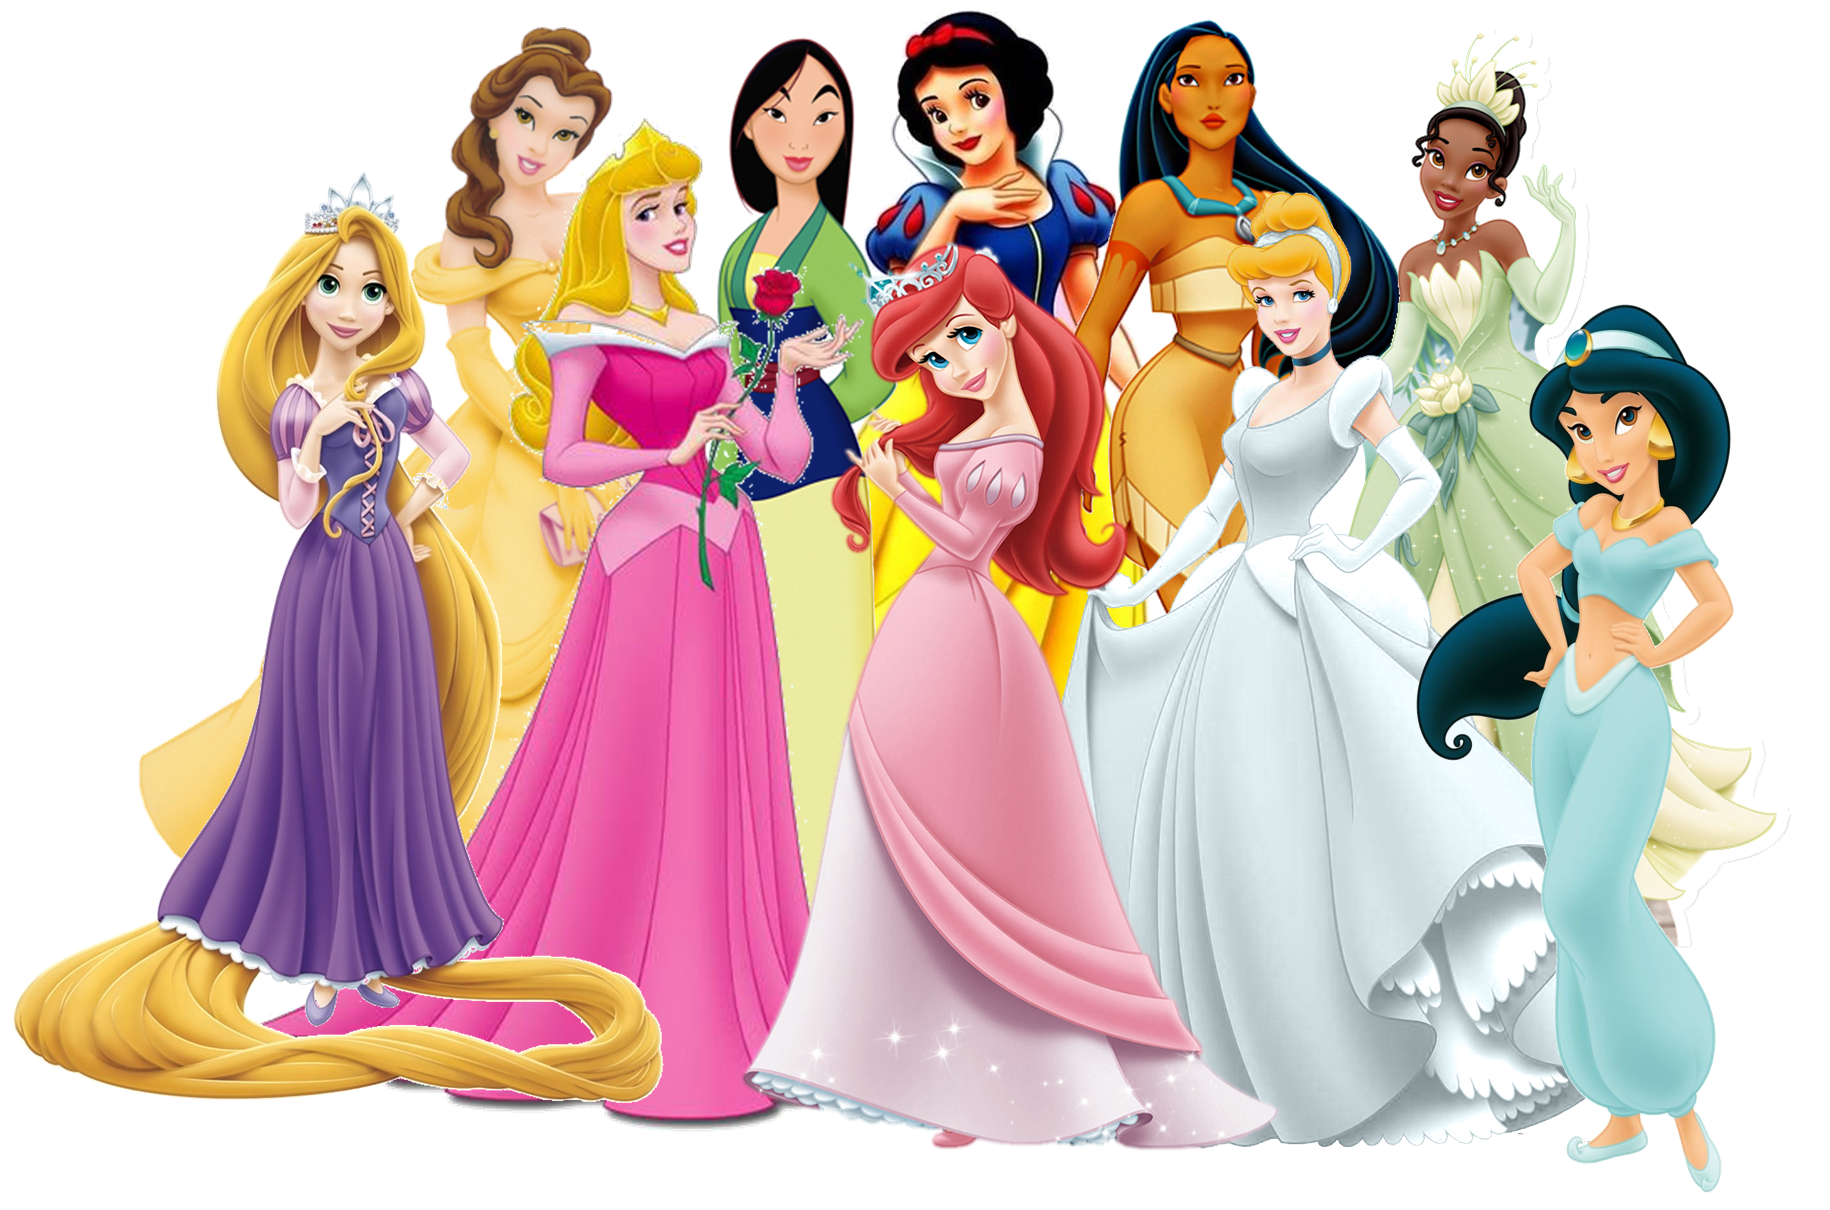 Disney Princess Characters Image Wallpaper